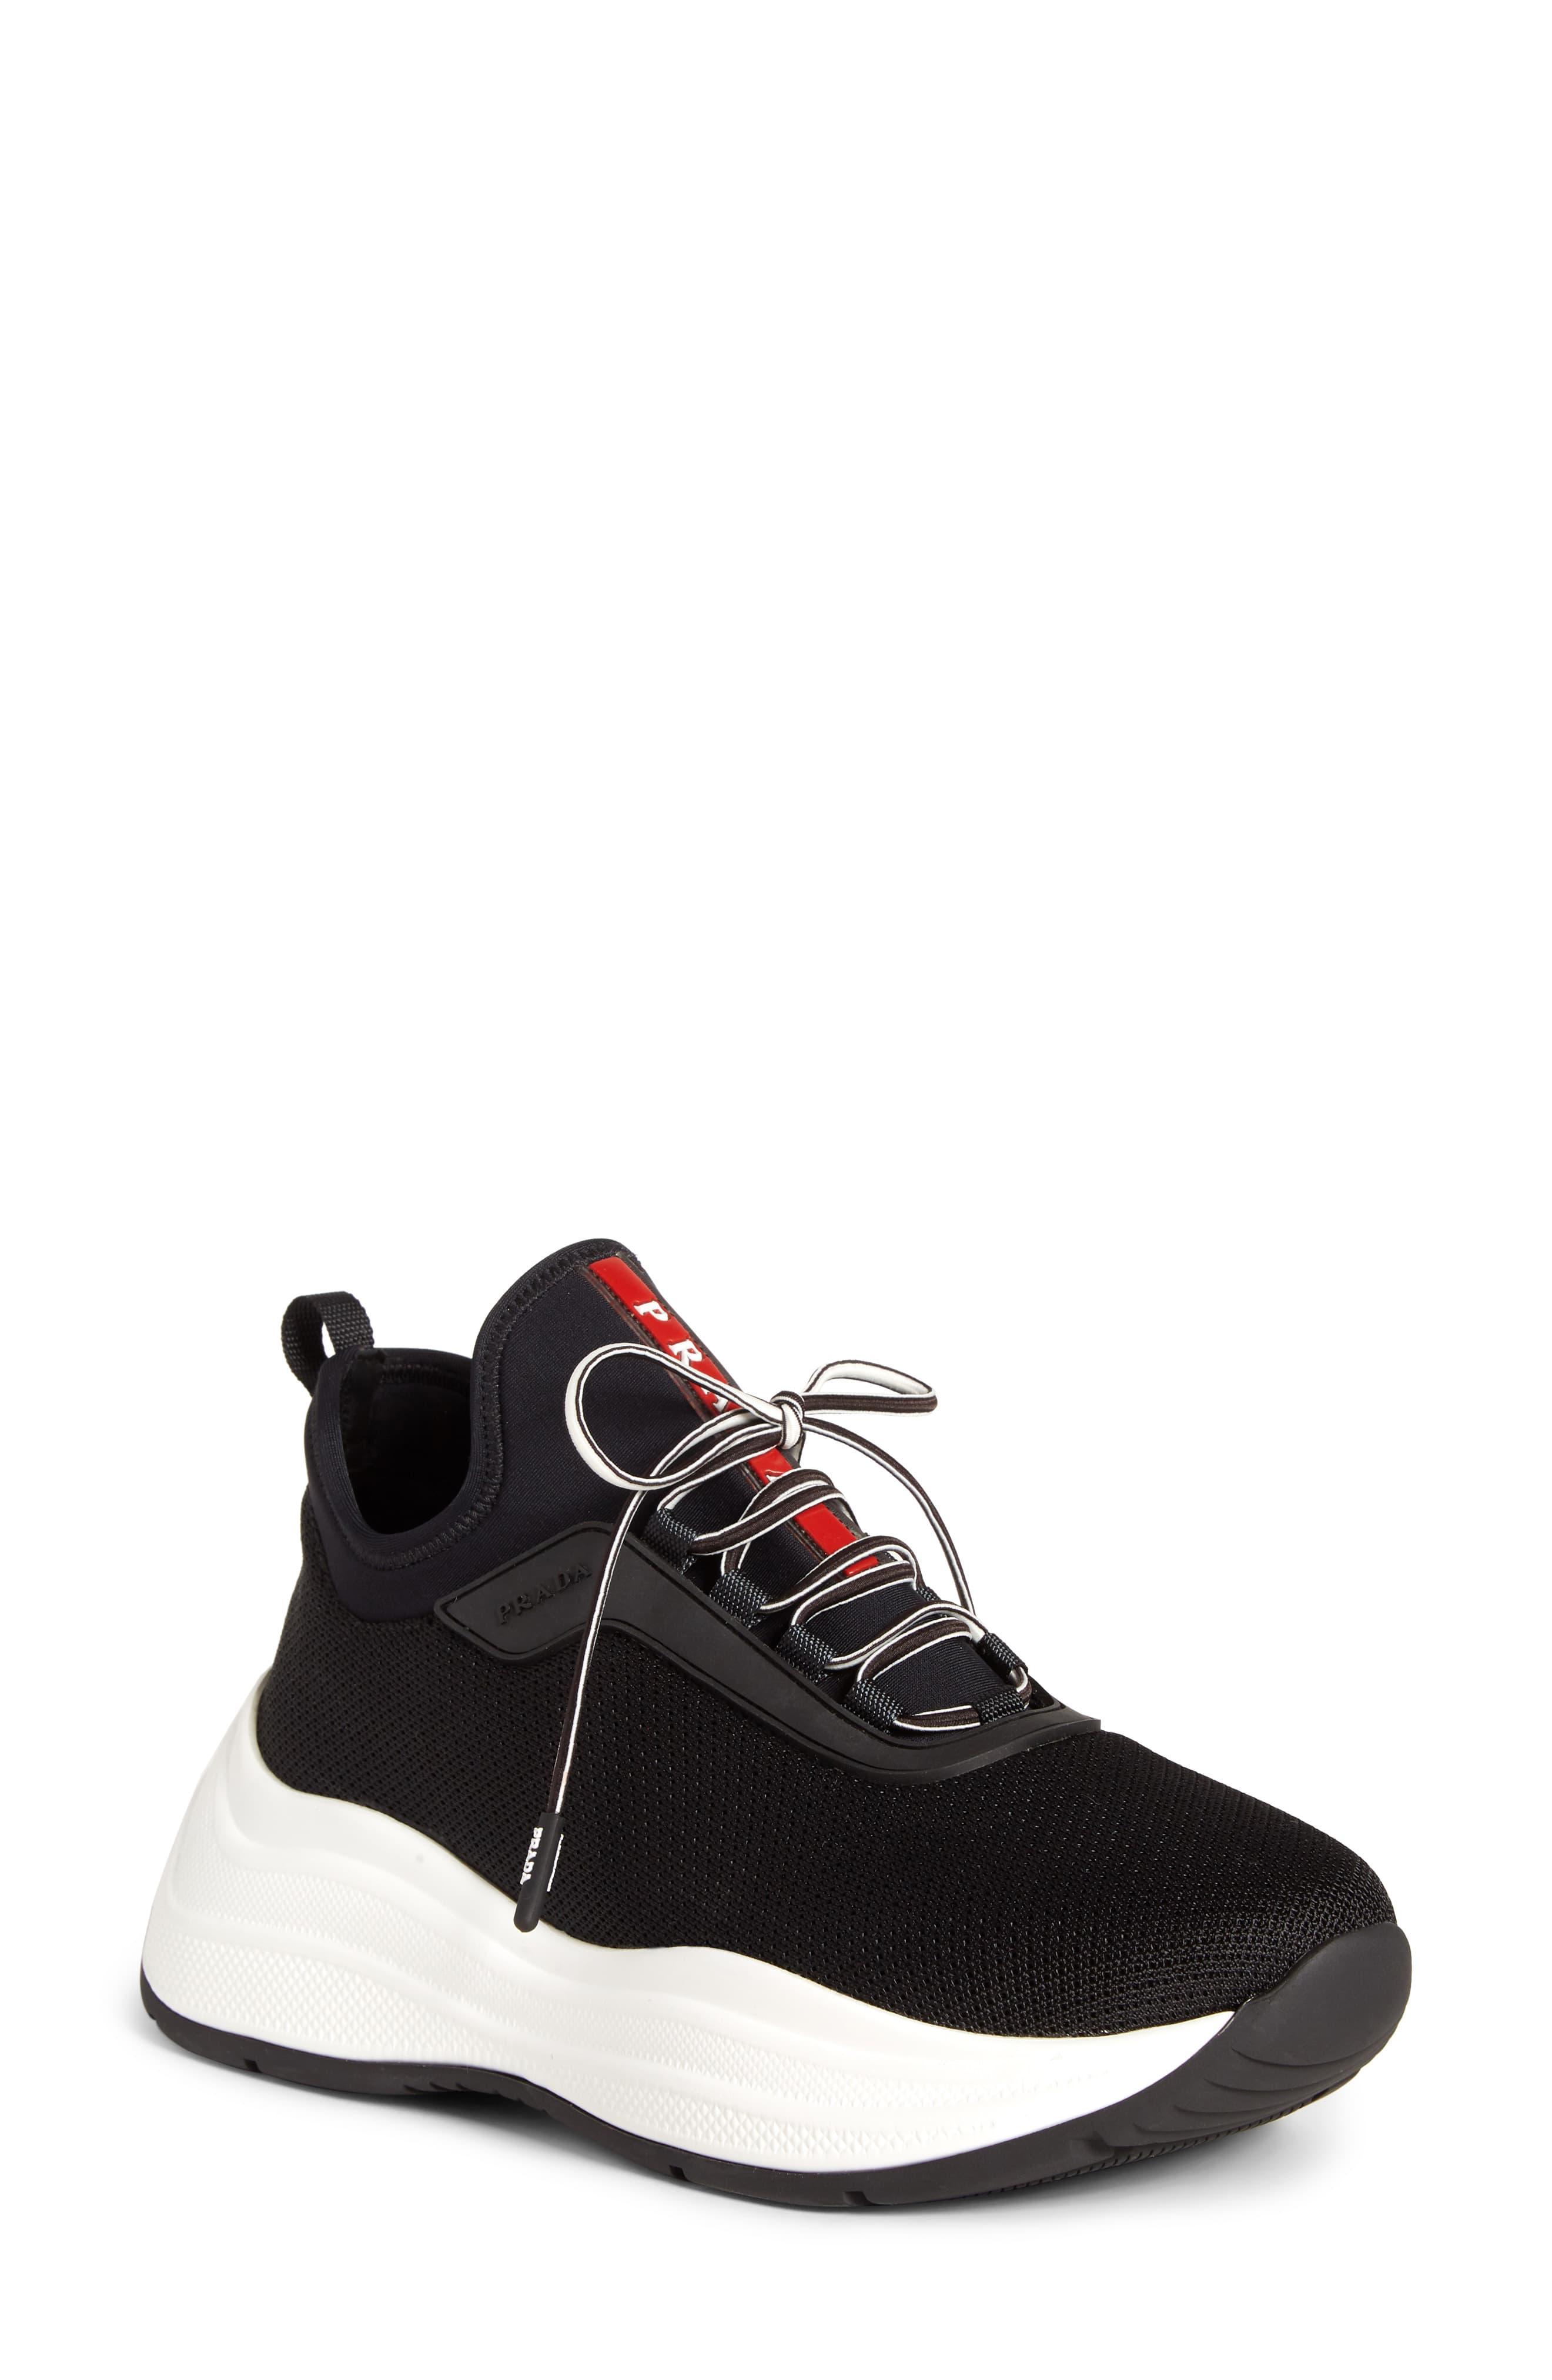 Prada Platform Lace-up Sneaker in Black - Lyst